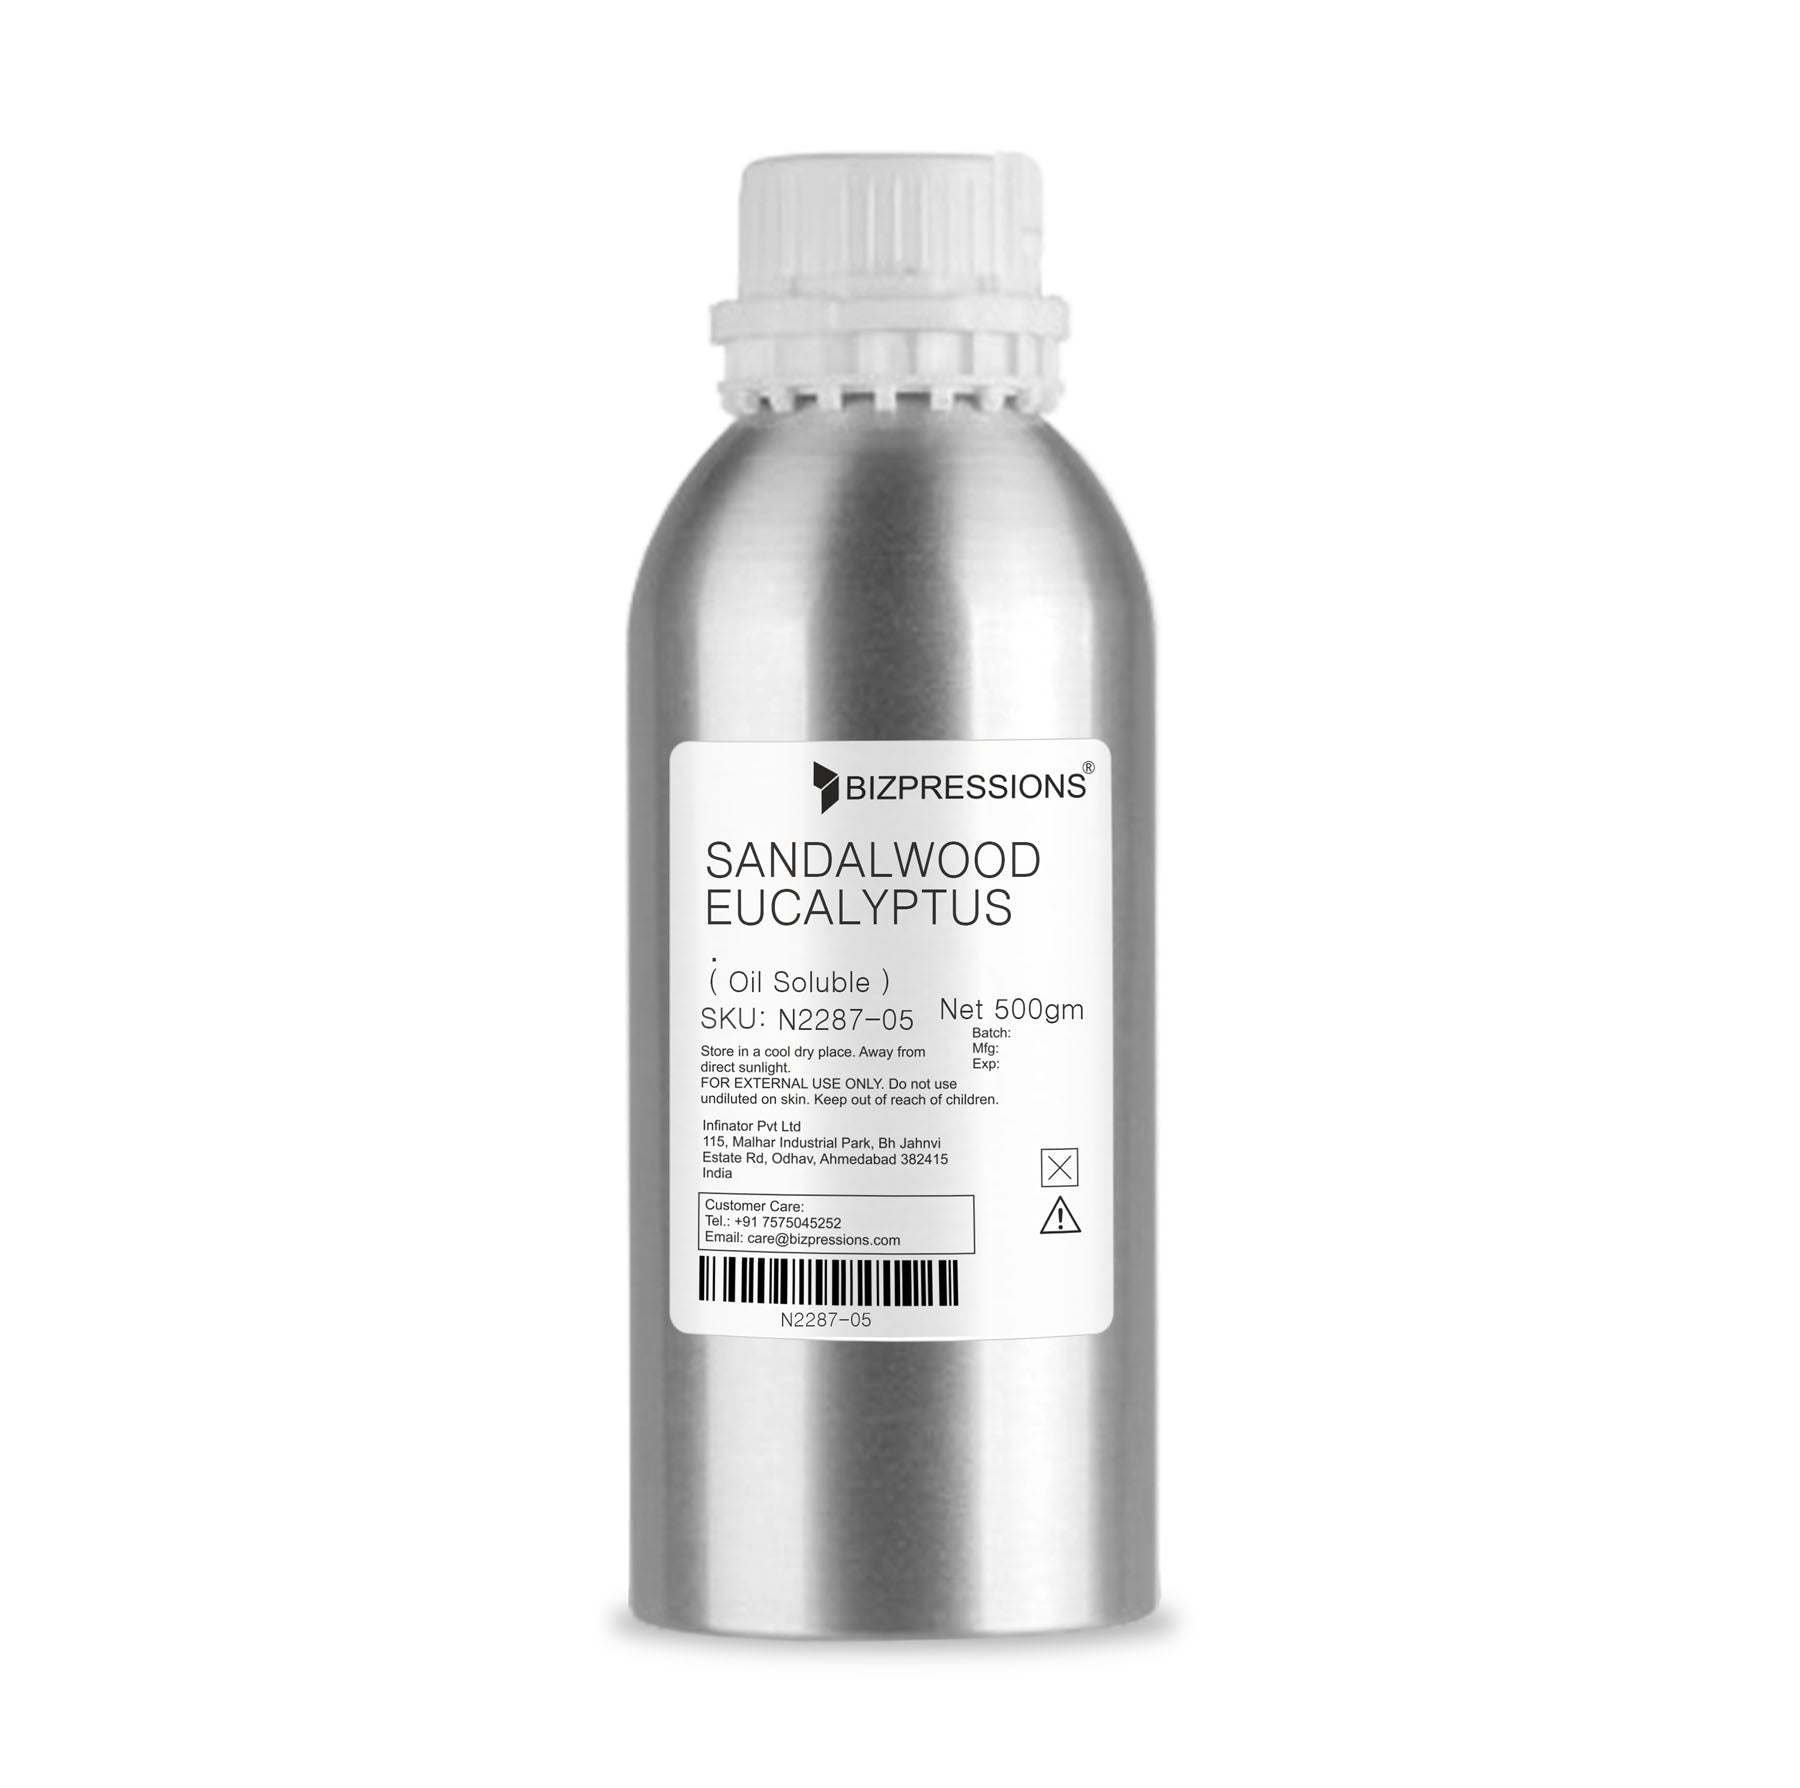 SANDALWOOD EUCALYPTUS - Fragrance ( Oil Soluble ) - 500 gm